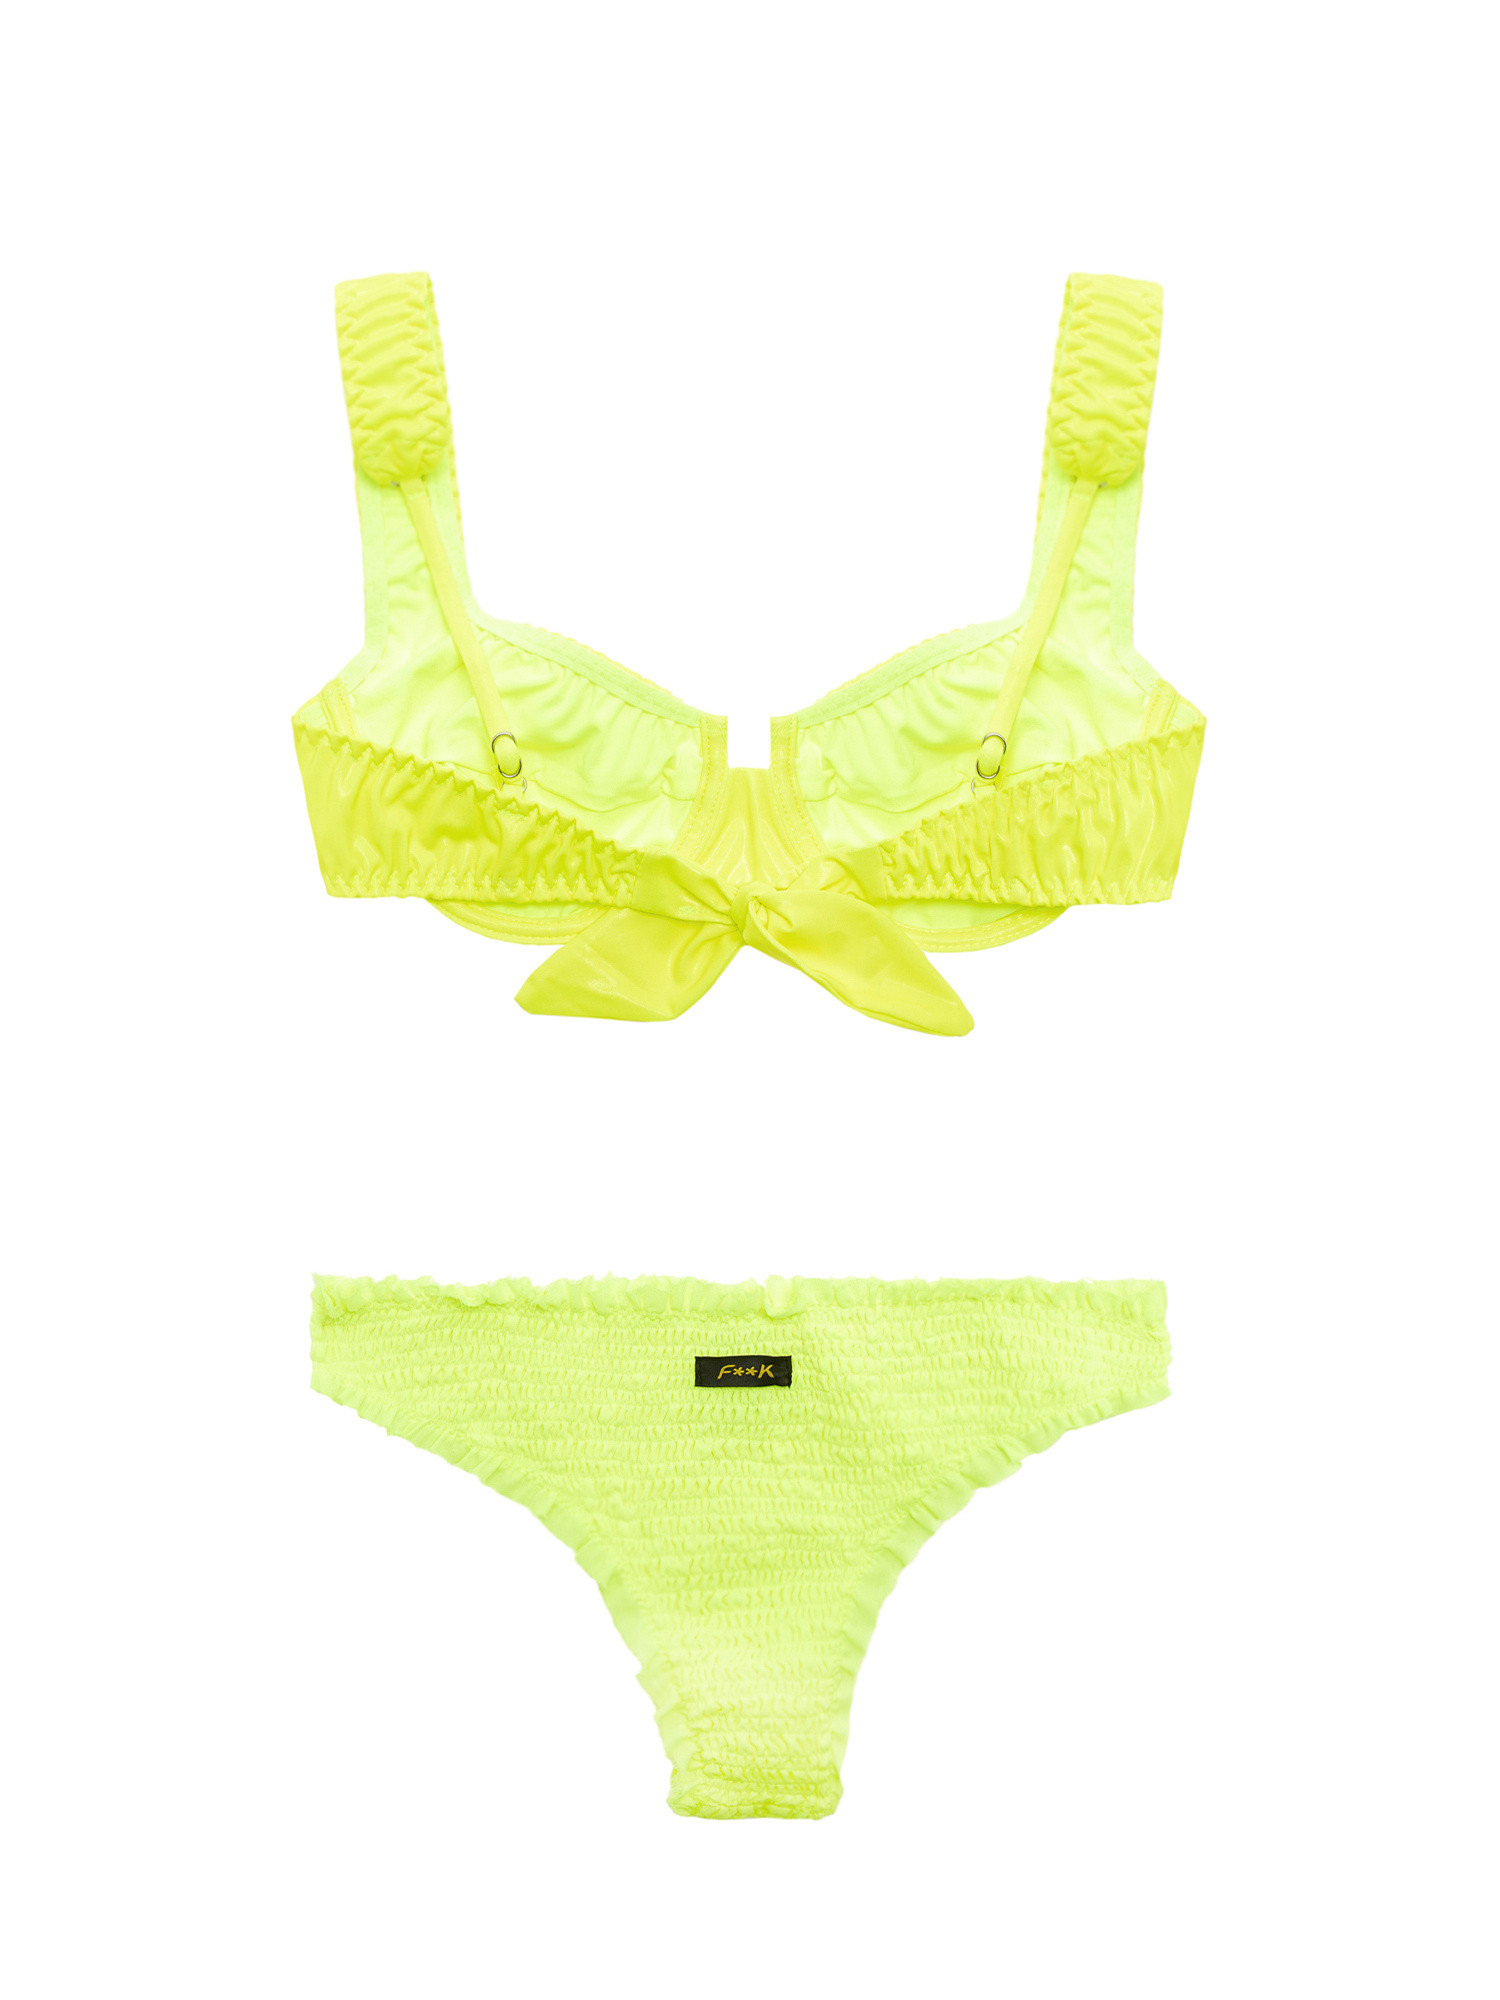 F**K - Bikini with underwire and Brazilian bottom, Yellow, large image number 1